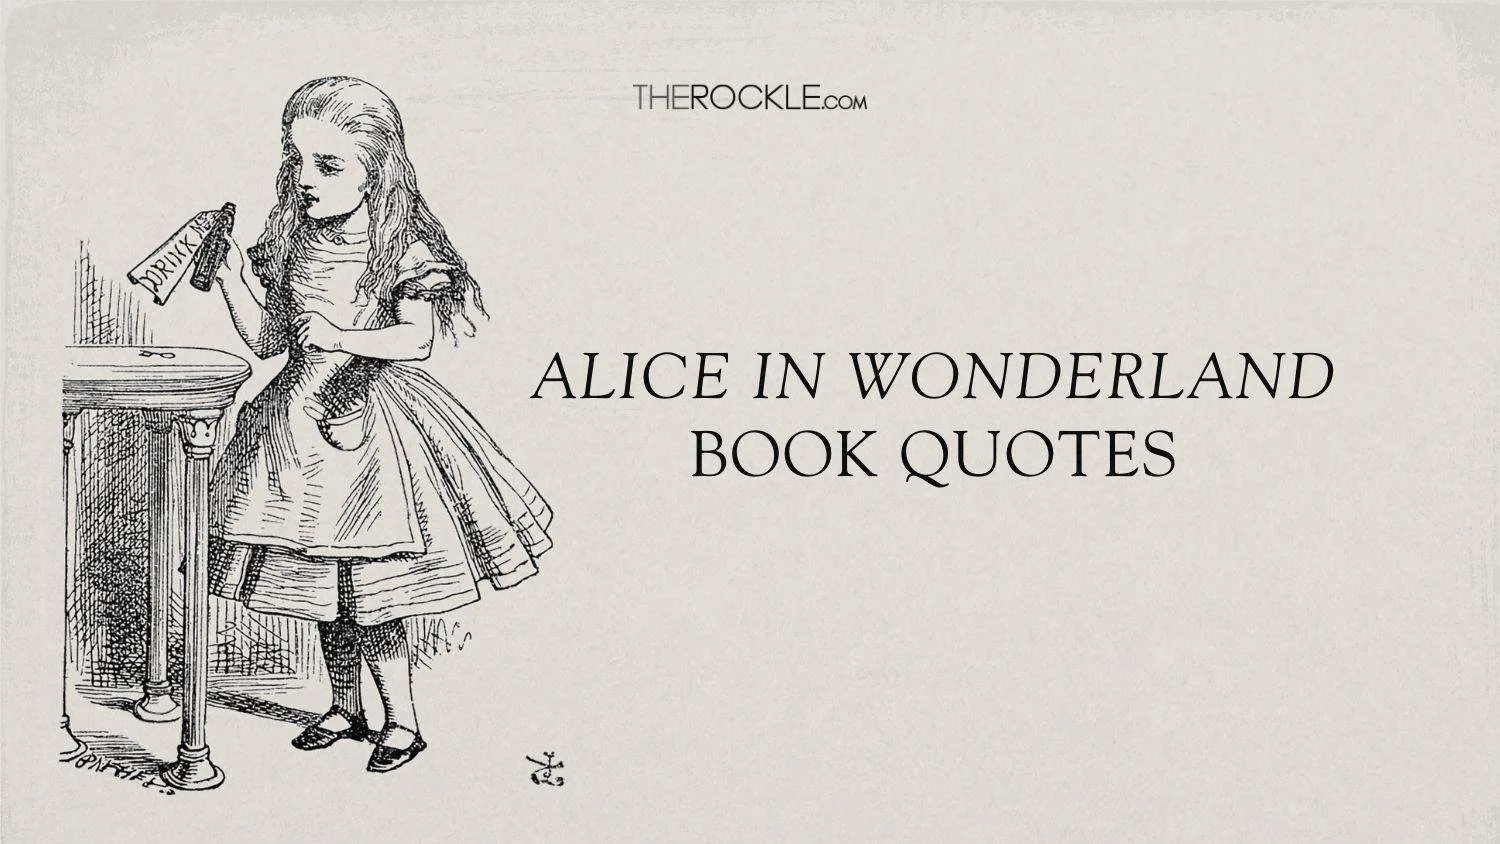 Alice in Wonderland book quotes